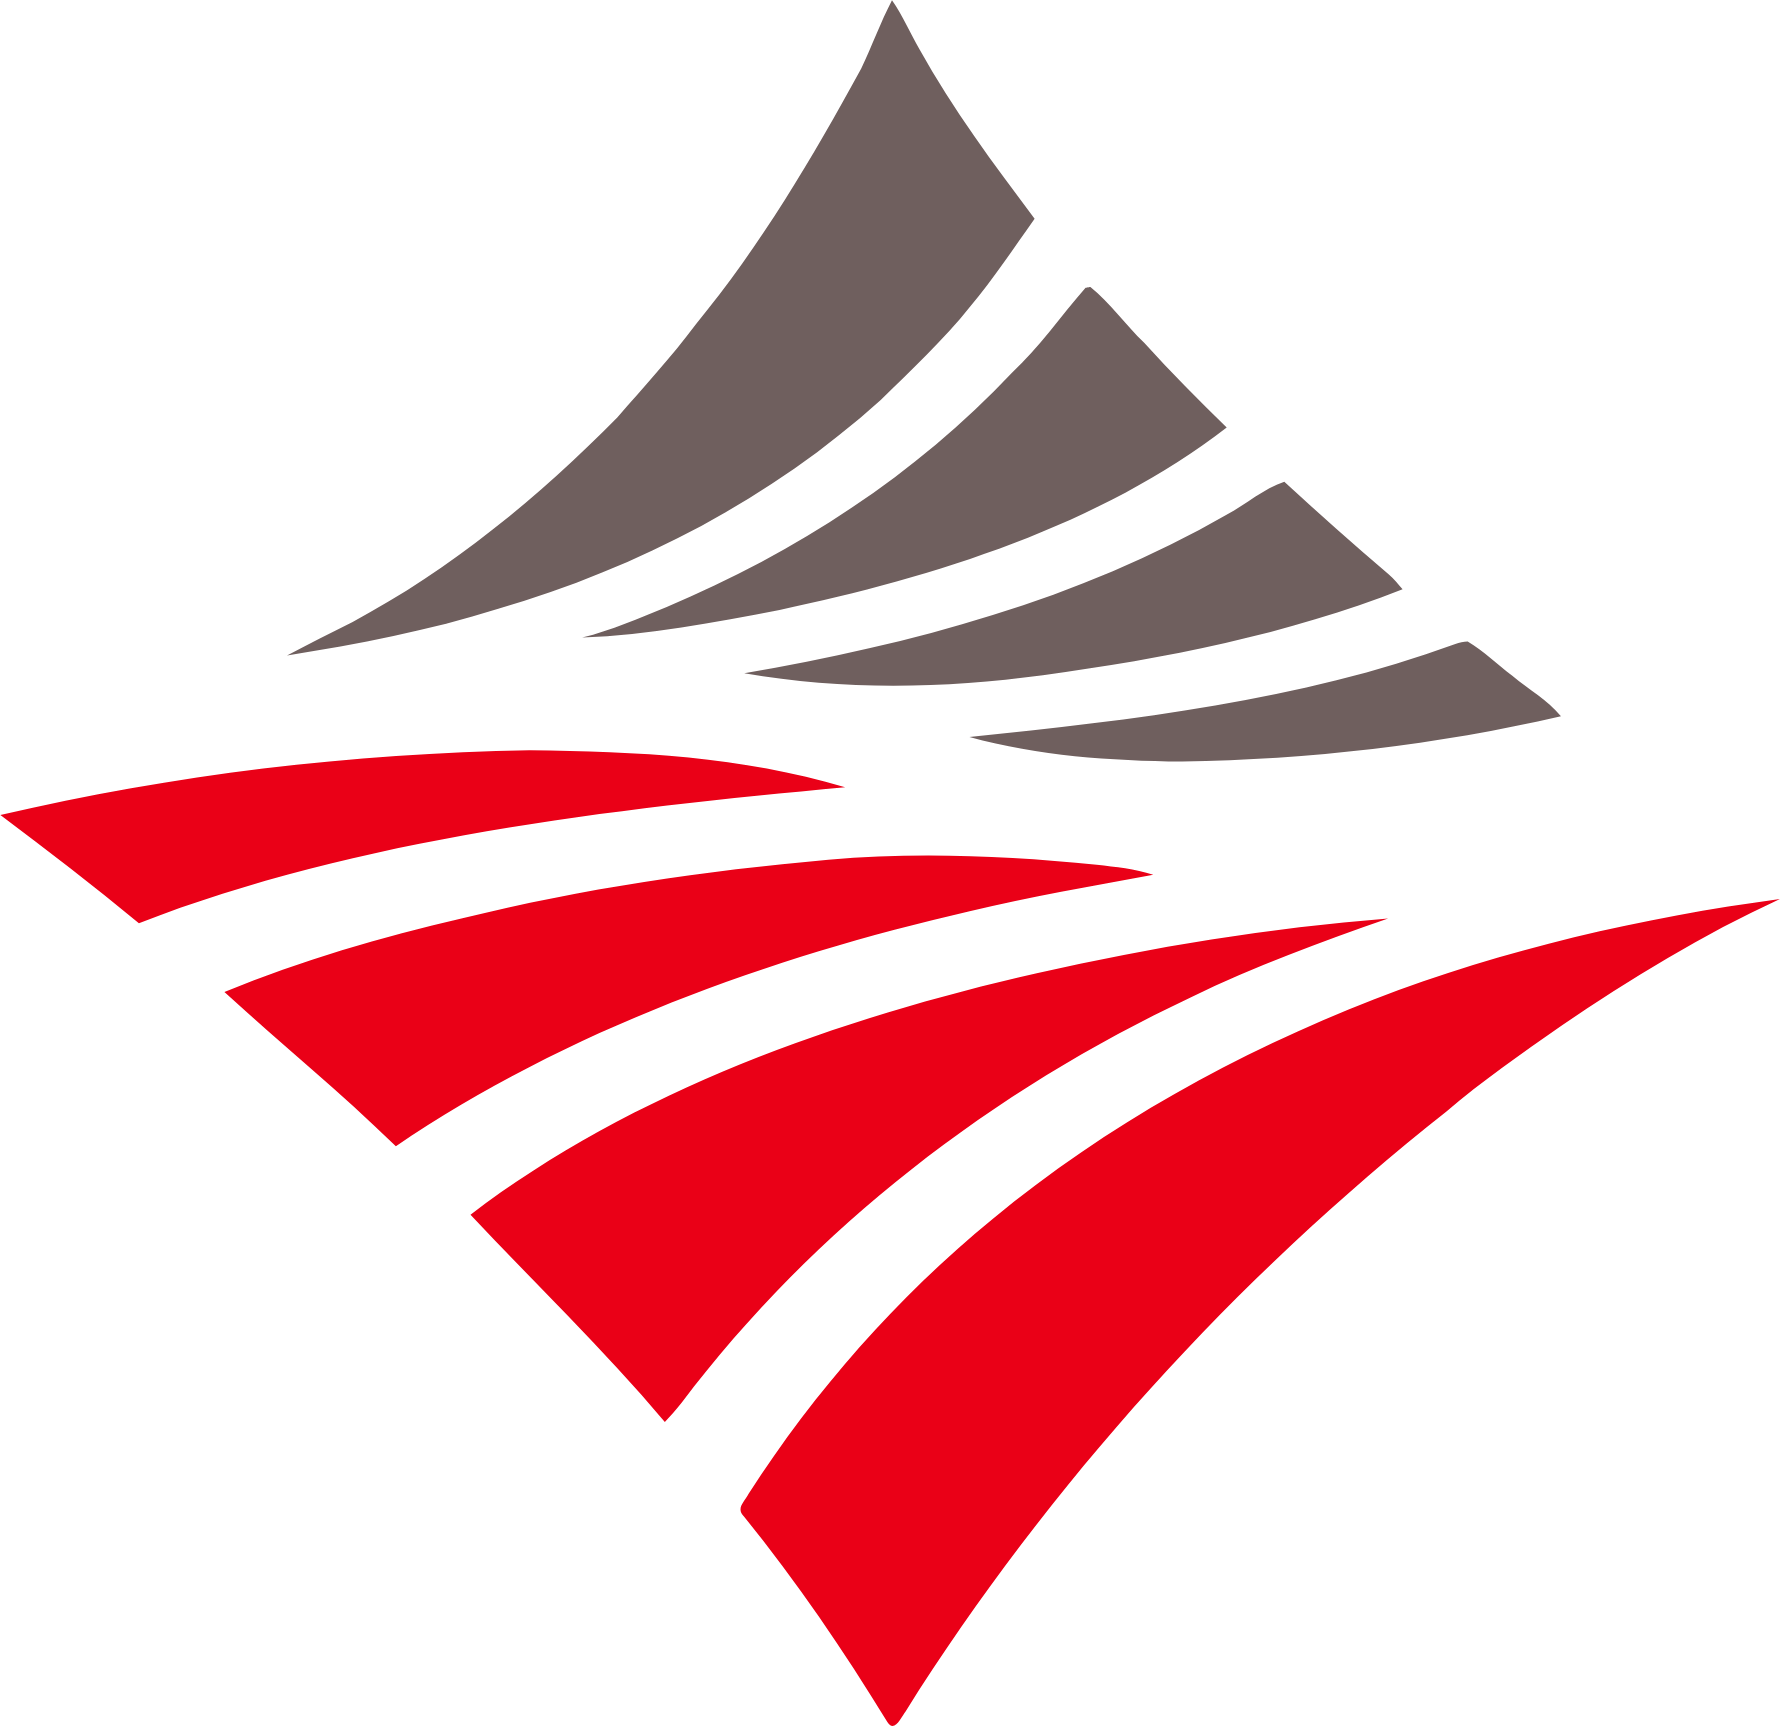 Frasers Logistics & Industrial Trust logo (transparent PNG)